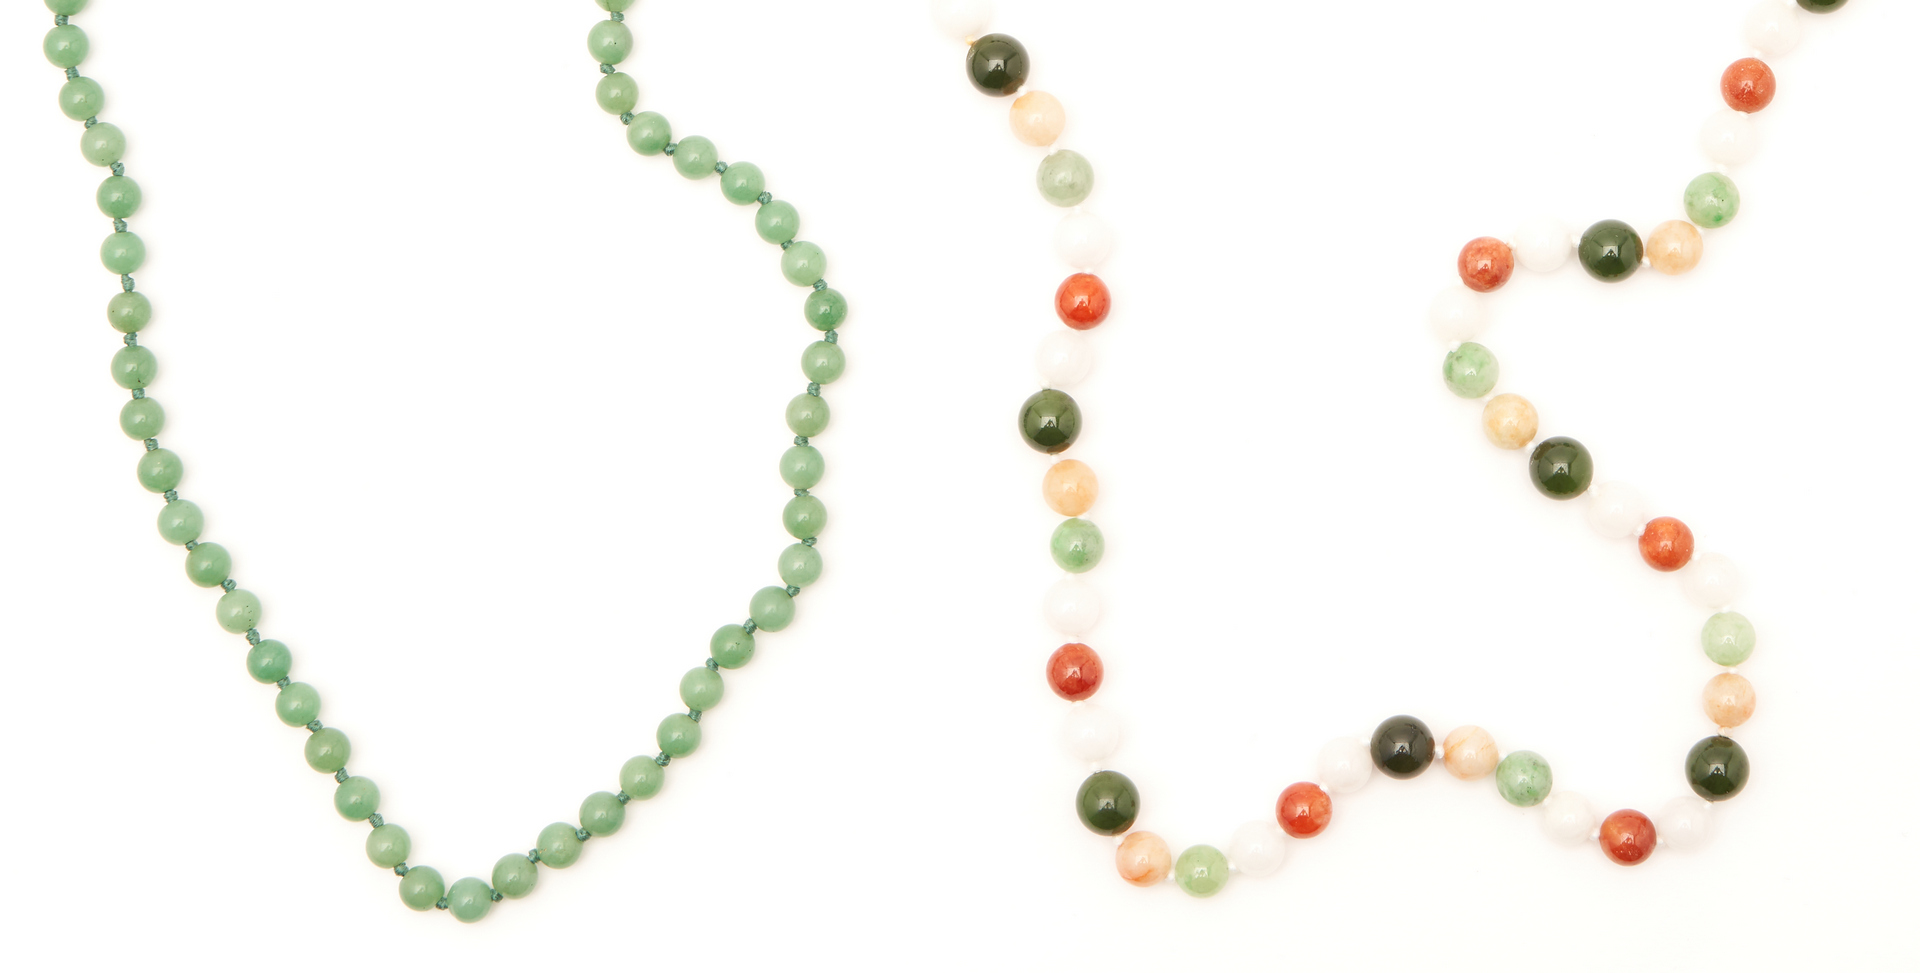 Lot 52: 9 Jade Jewelry Items, incl. Necklaces, Pendants & Earrings